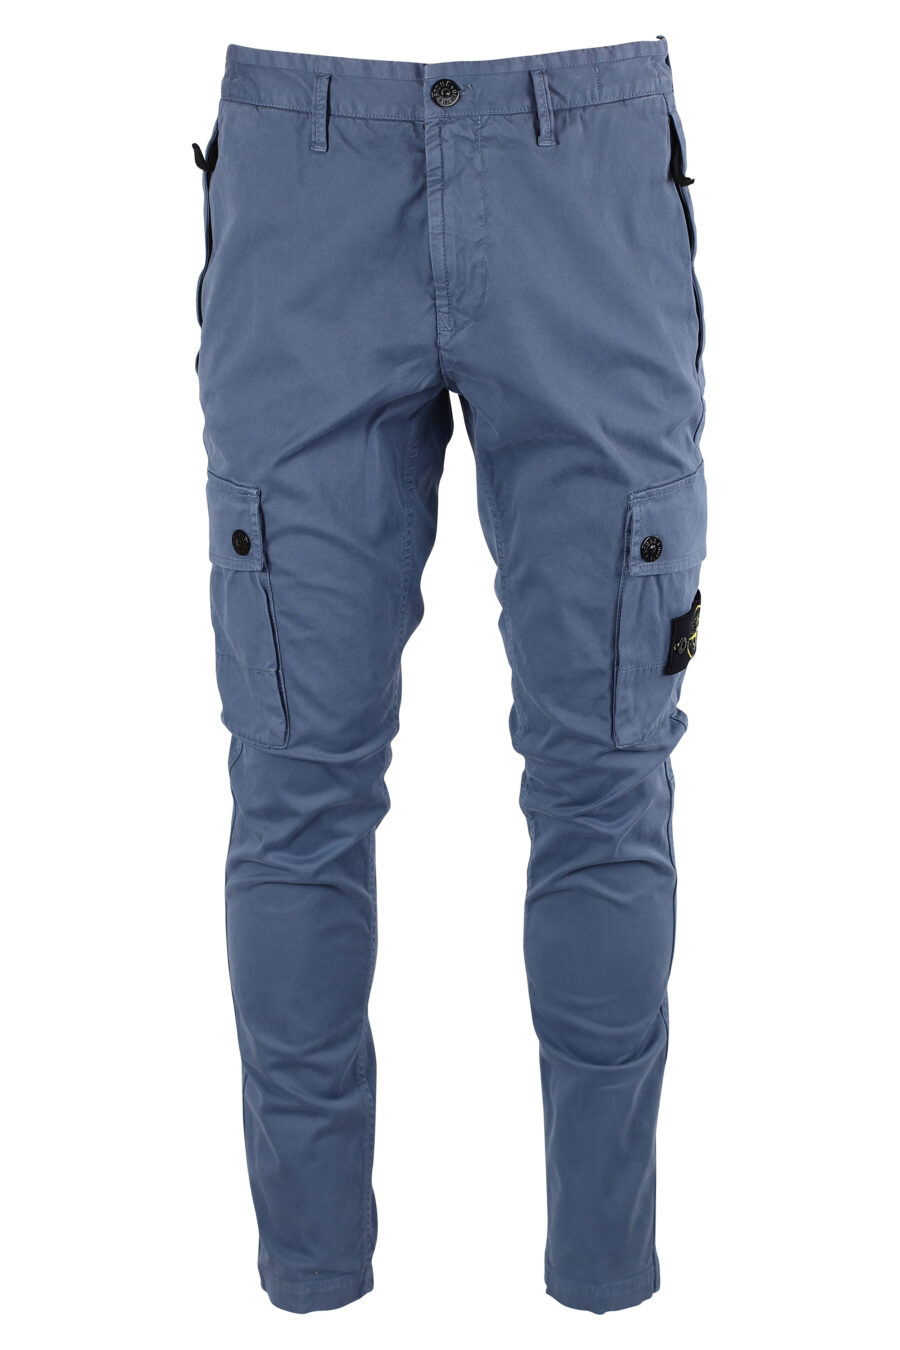 Pantalón azul grisáceo con bolsillos y parche lateral - IMG 8319